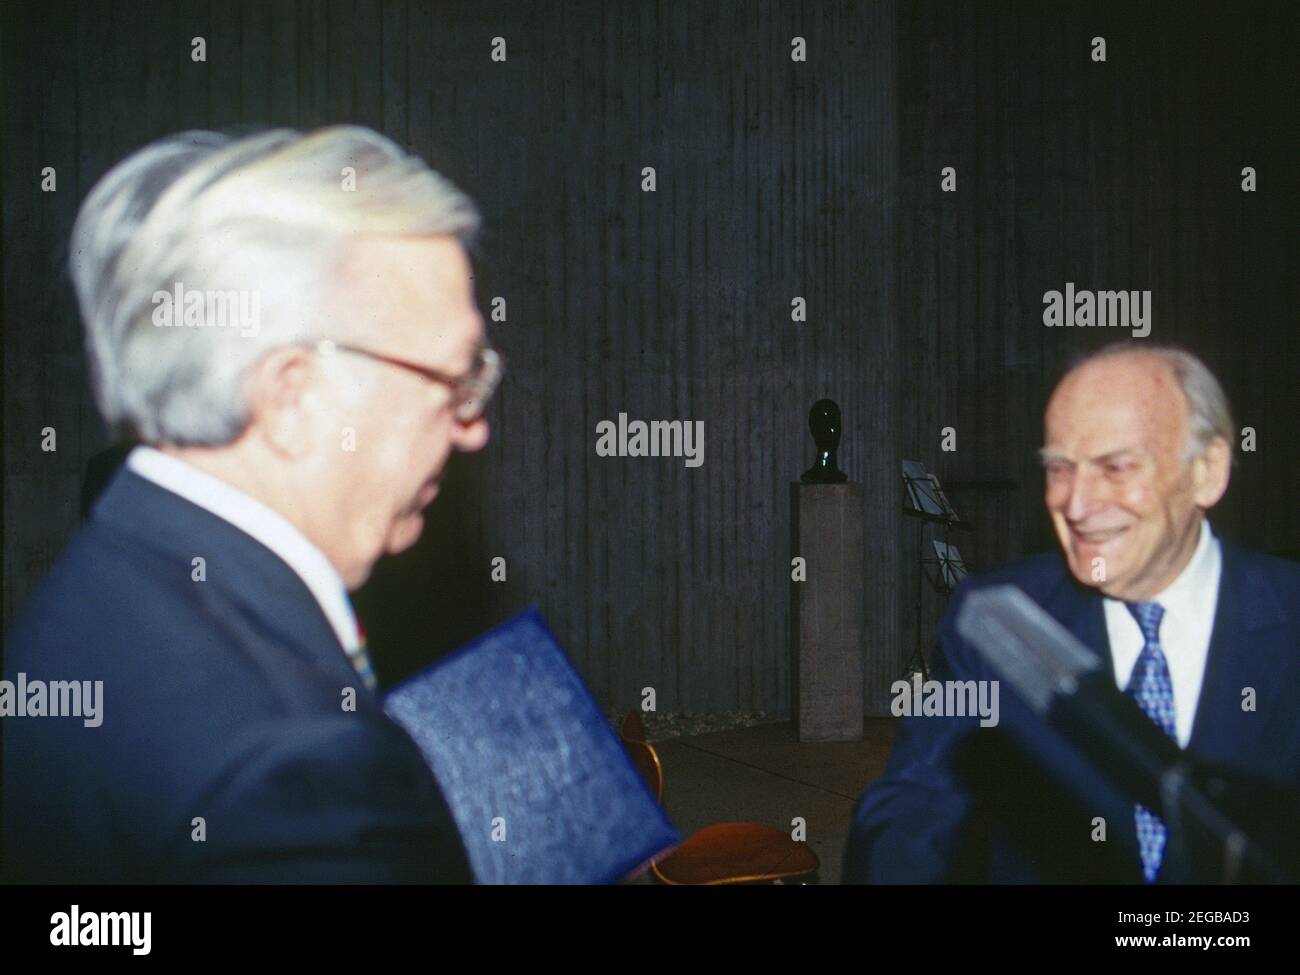 Sir Yehudi Menuhin bekommt 1992 den Musikpreis der Stadt Duisburg verliehen. In 1992 Sir Yehudi Menuhin is awarded with the music prize of the city of Duisburg, Germany. Stock Photo